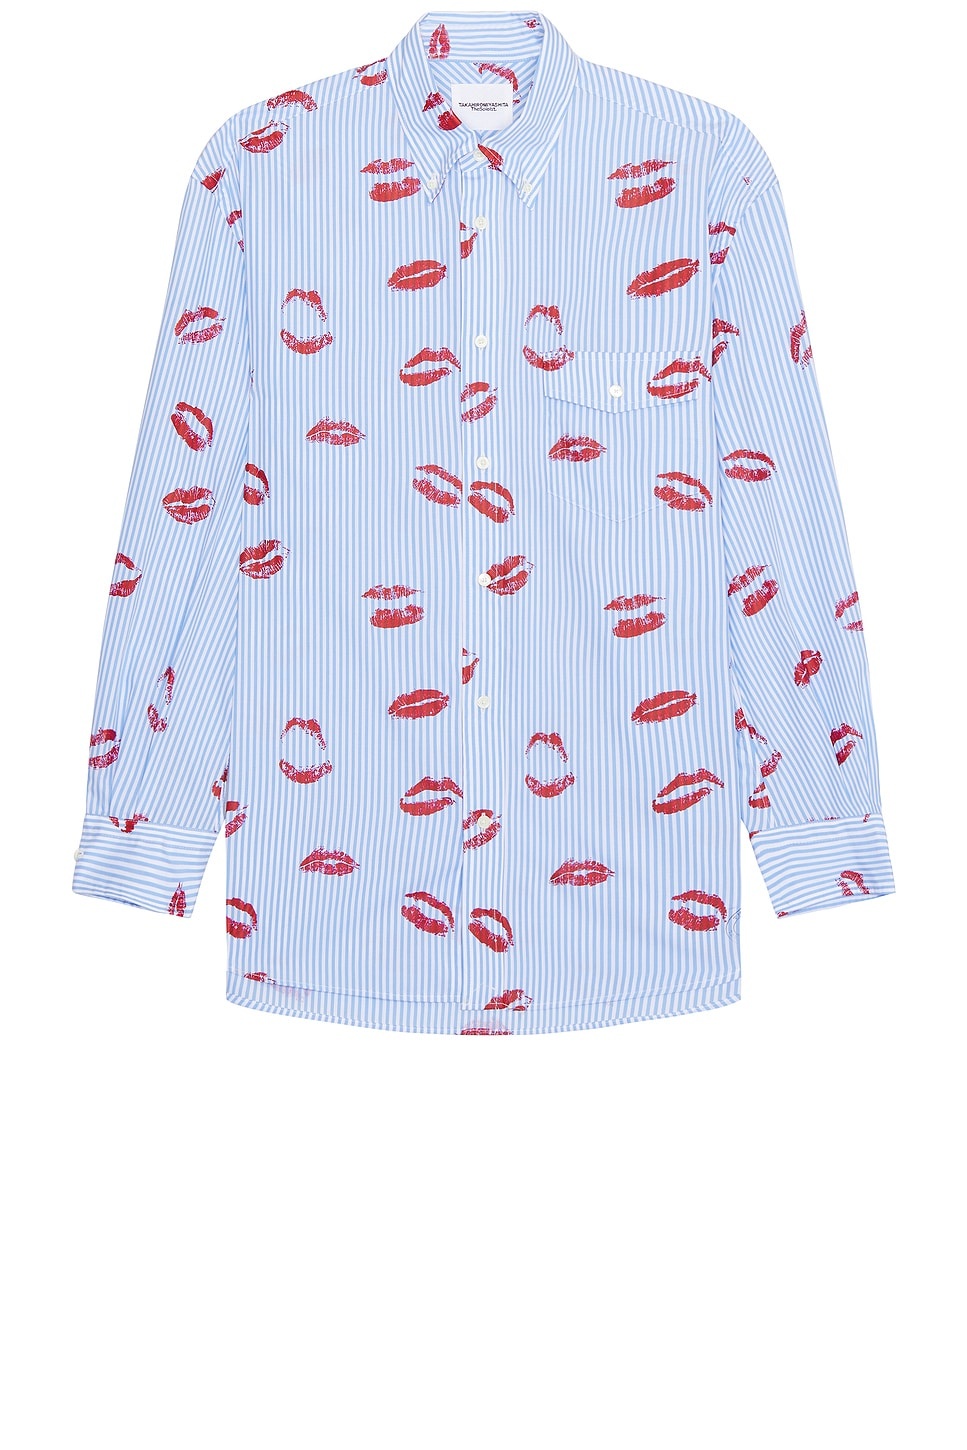 Back Gusset Lip Pattern Shirt - 1